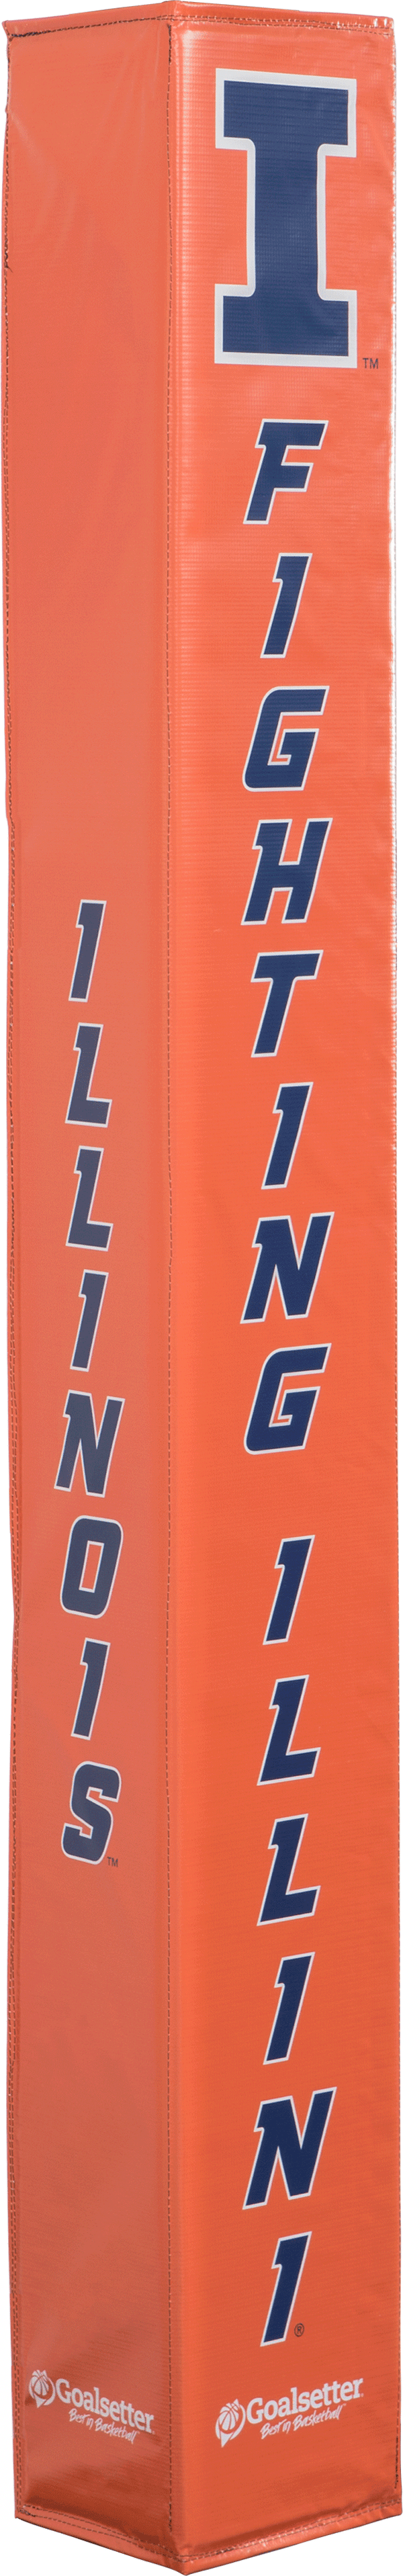 Goalsetter Collegiate Pole Pad - NCAA Illinois Illini (Orange) - Primary Mark_1